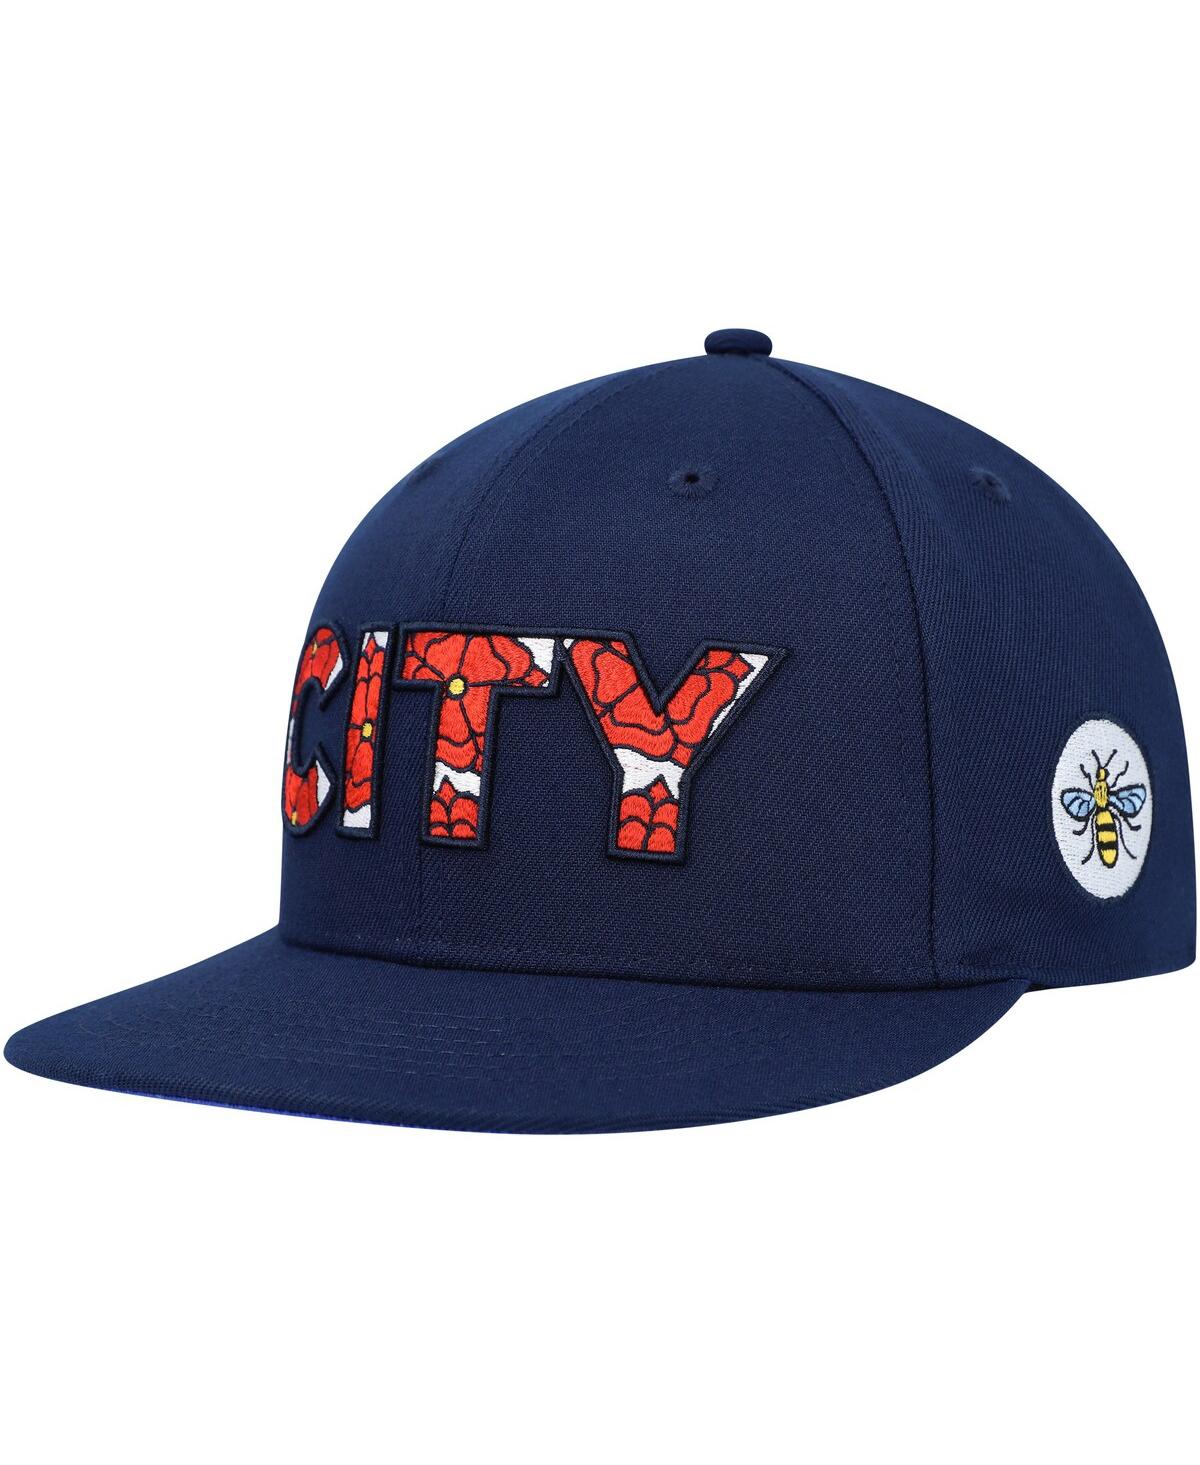 Men's Navy Manchester City Bode Snapback Hat - Navy